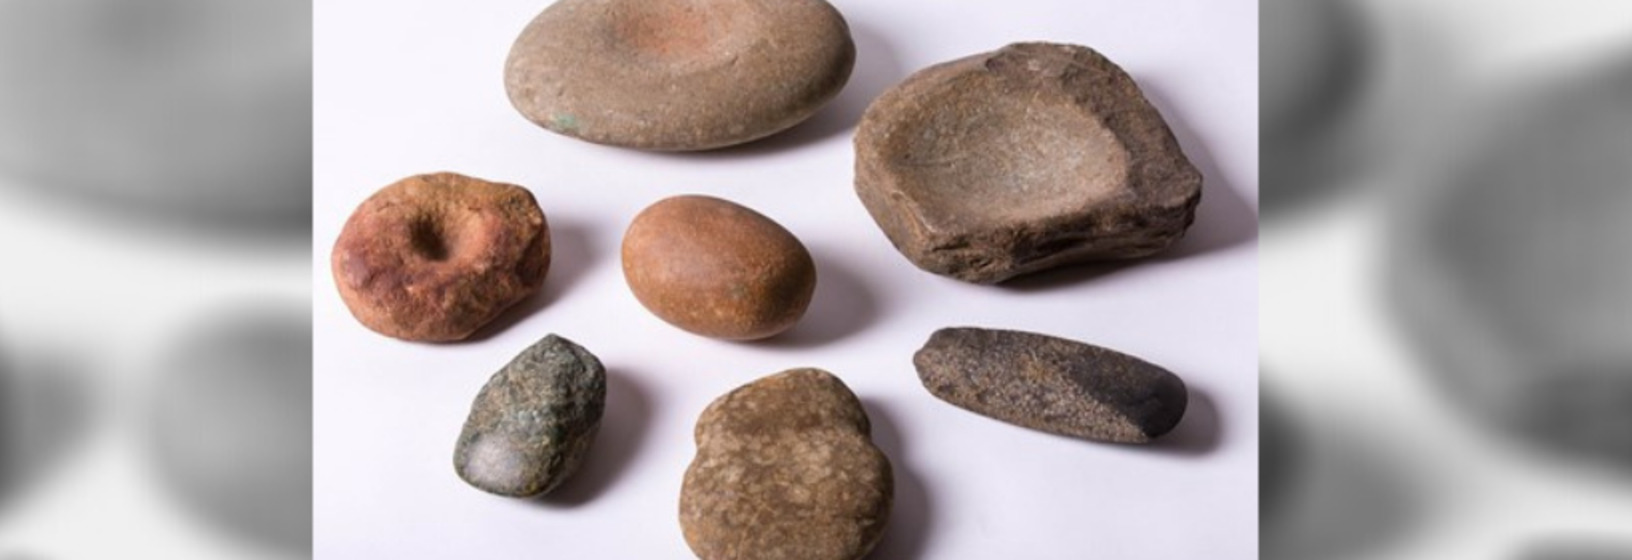 set of stone tools